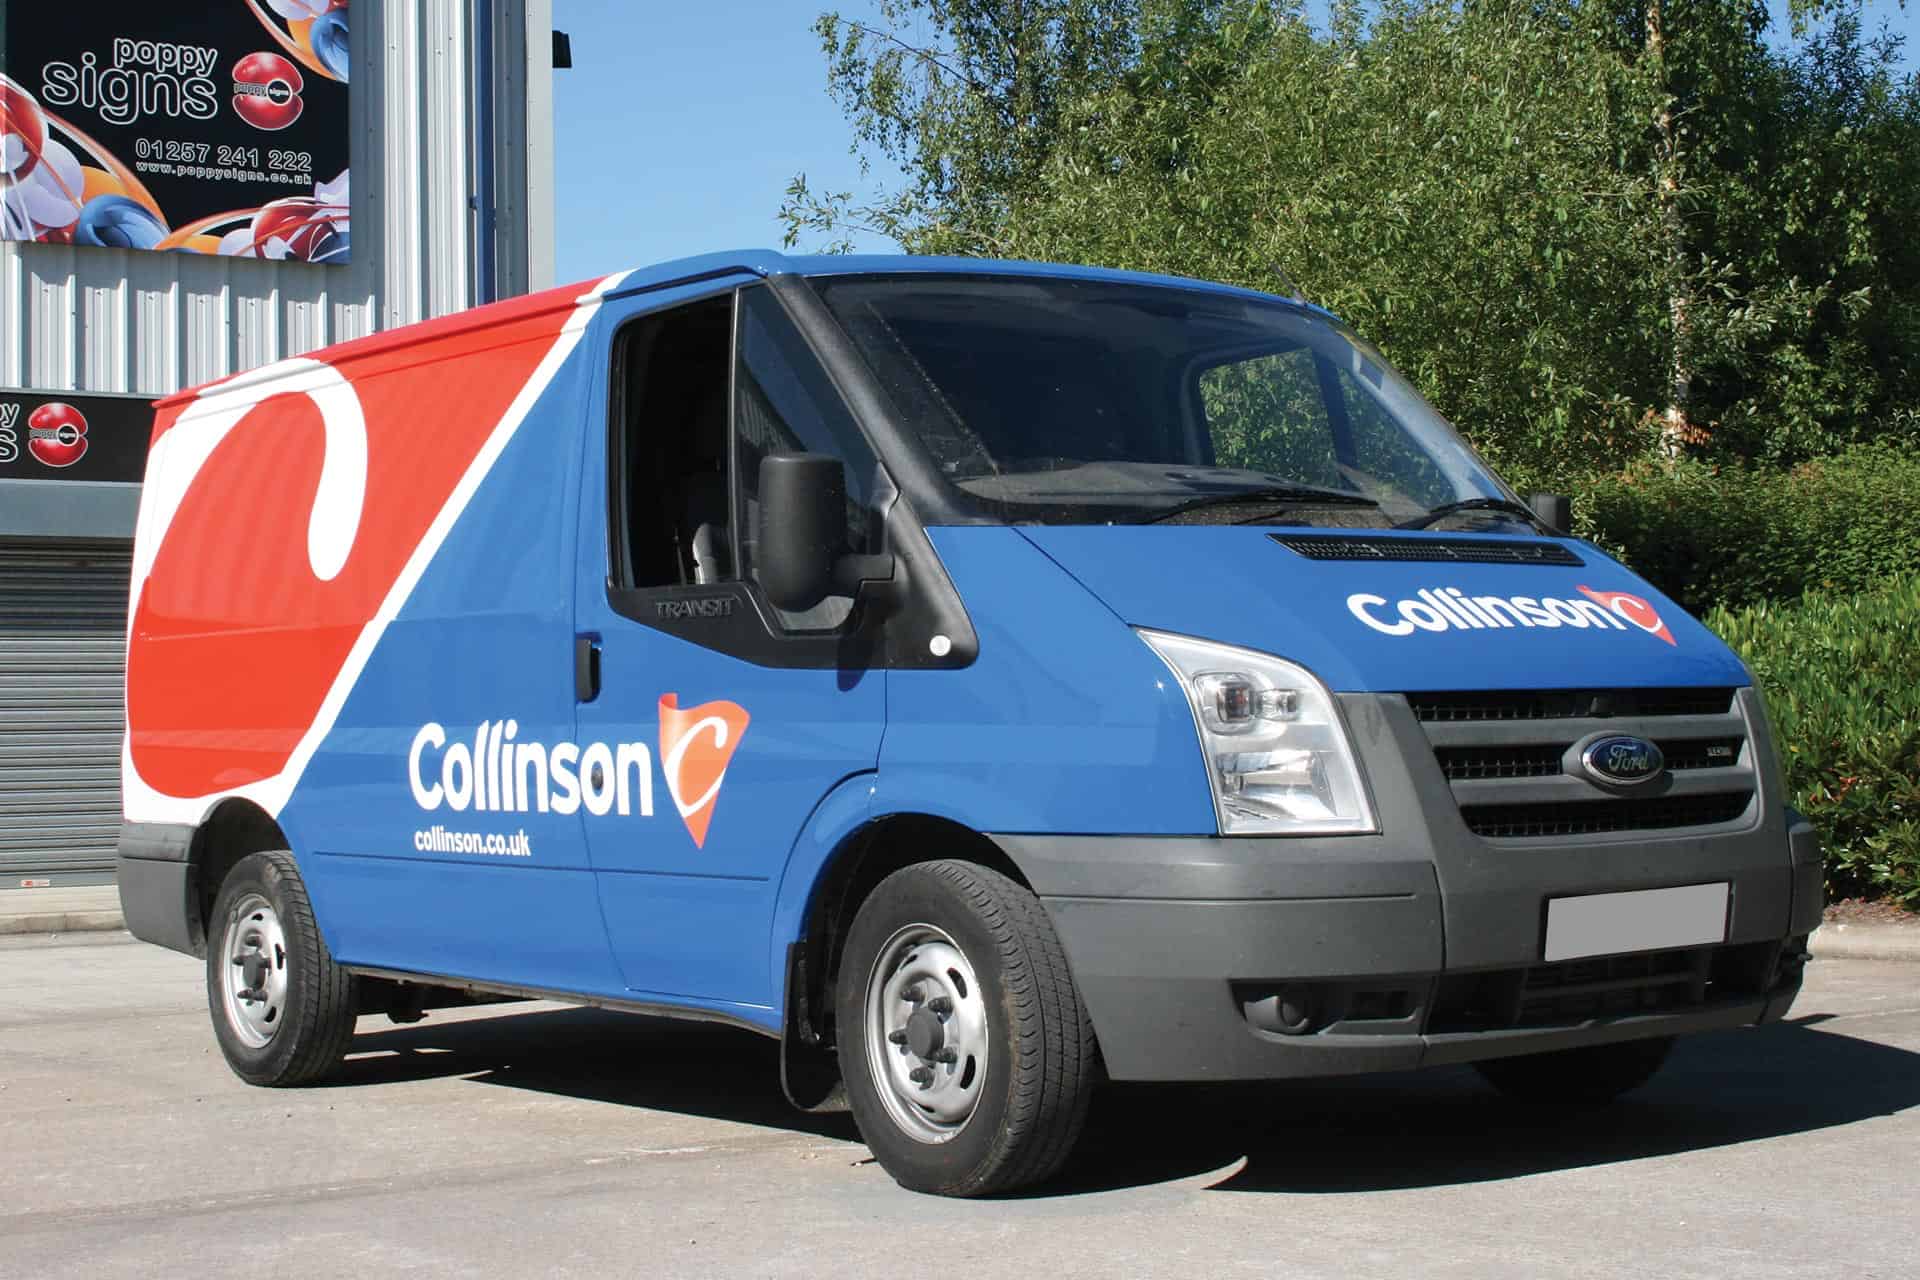 Collinson - full van wrap